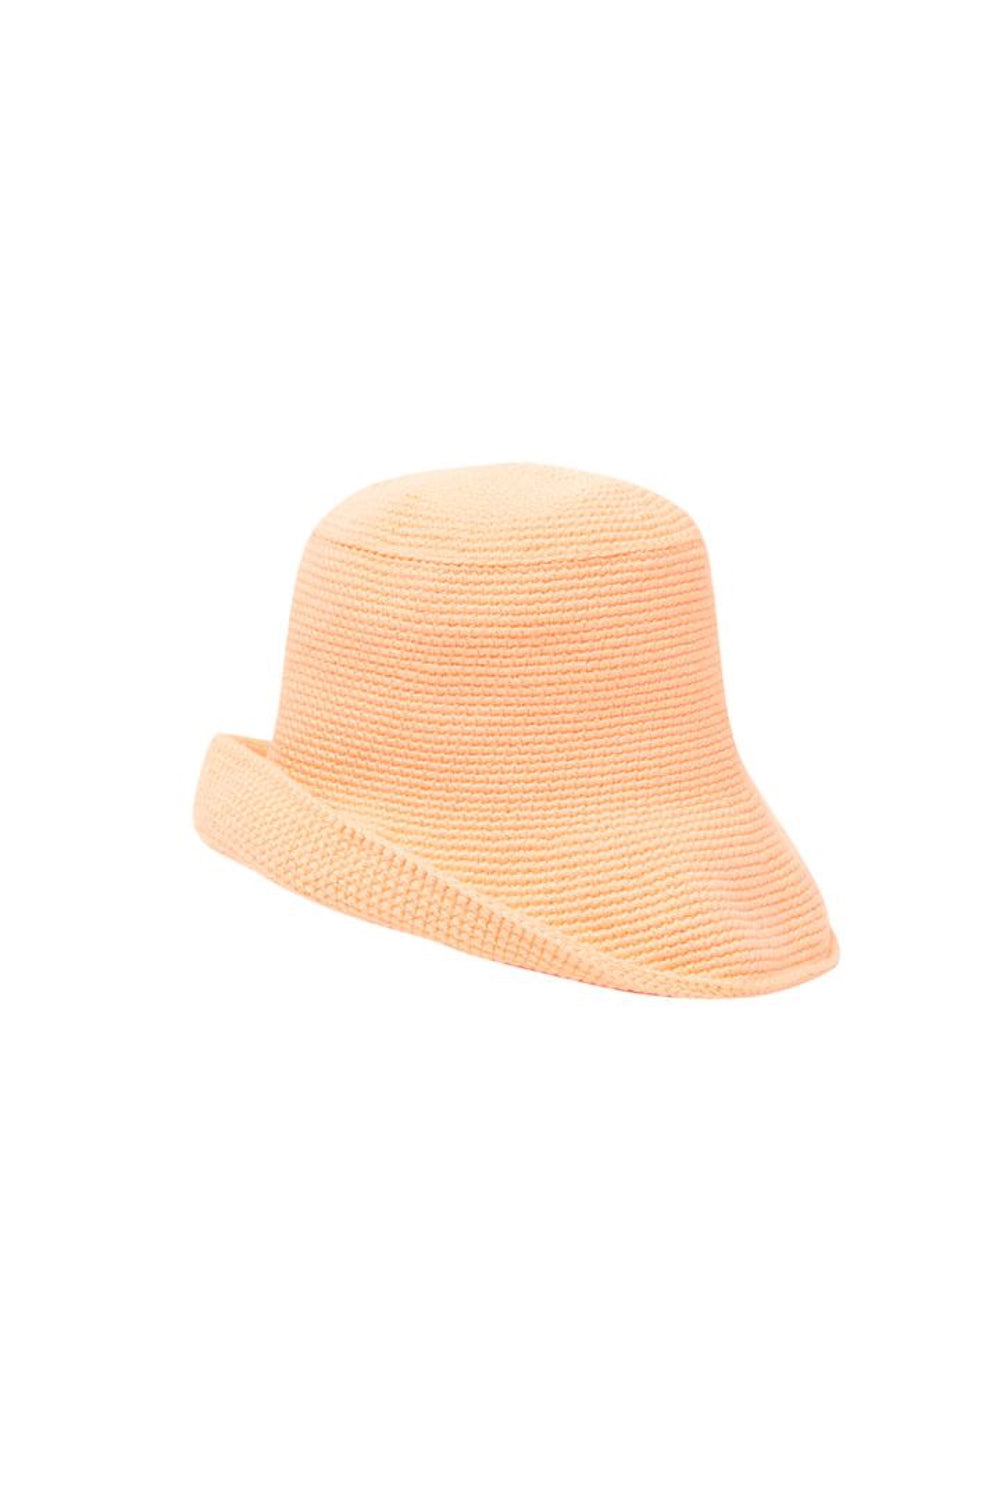 Coral Crochet Bucket Hat